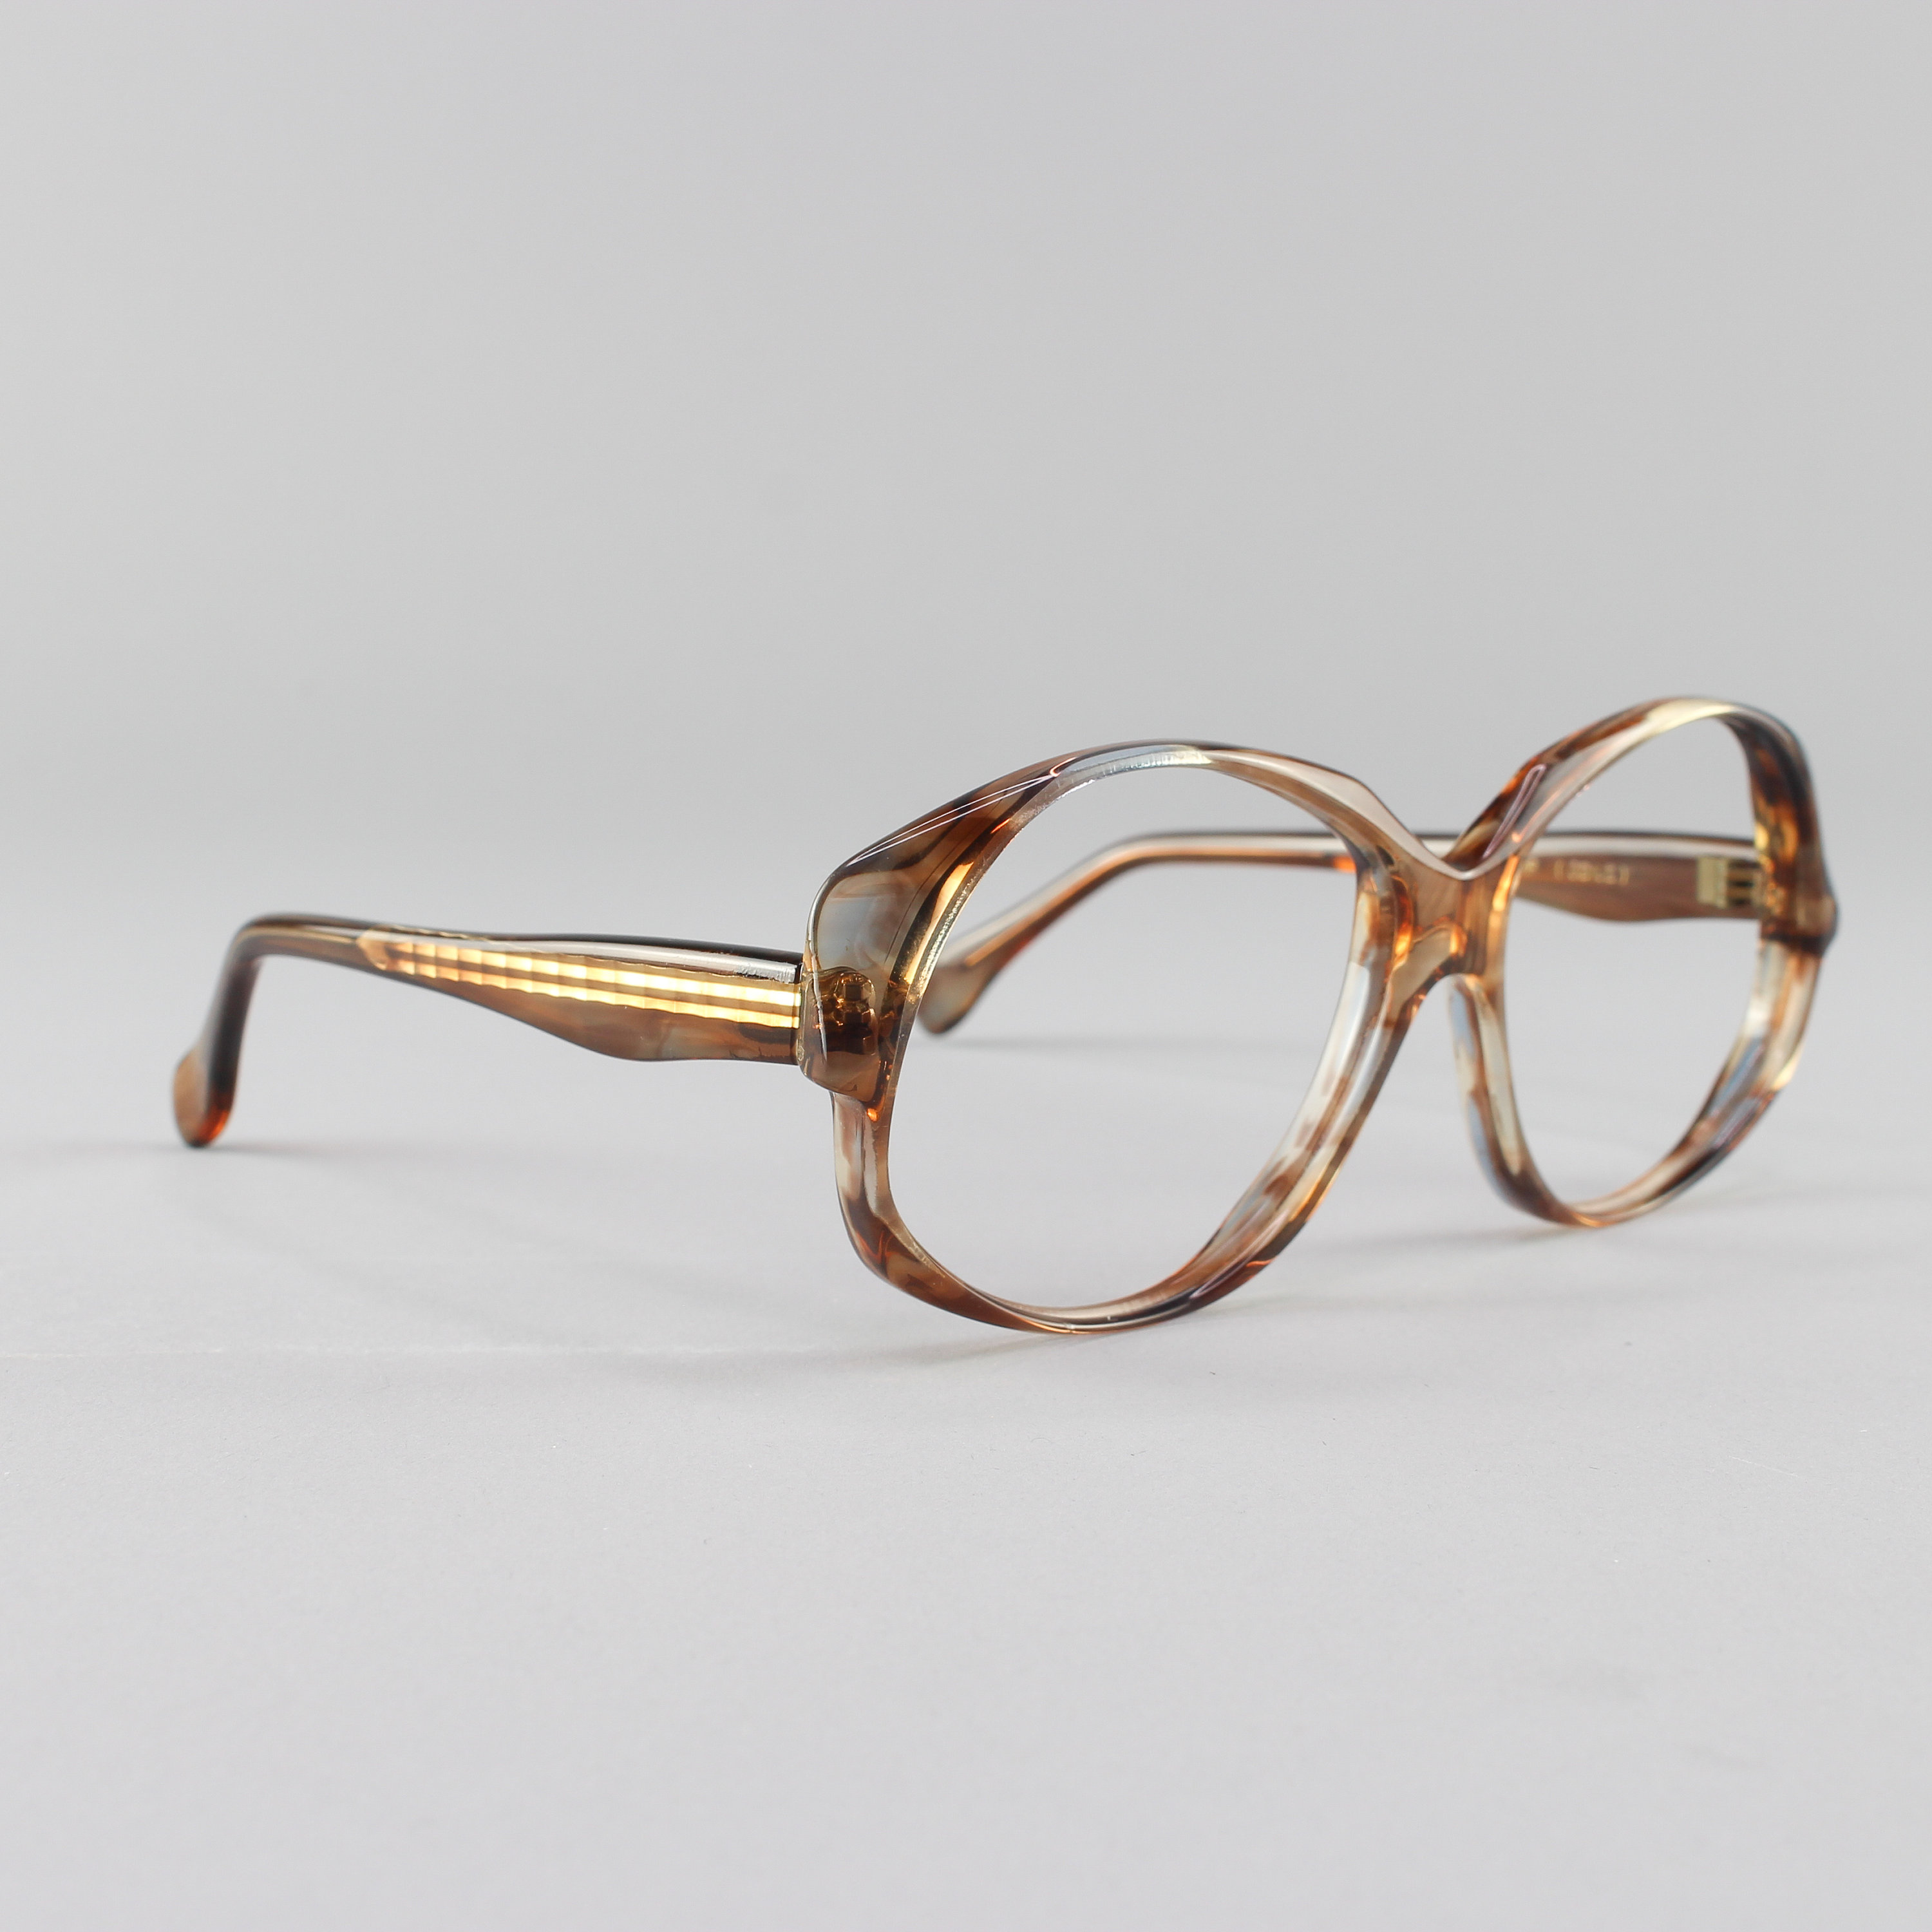 Oro luoem Vintage redondas gafas claras lente gafas sin grosor Unisex 